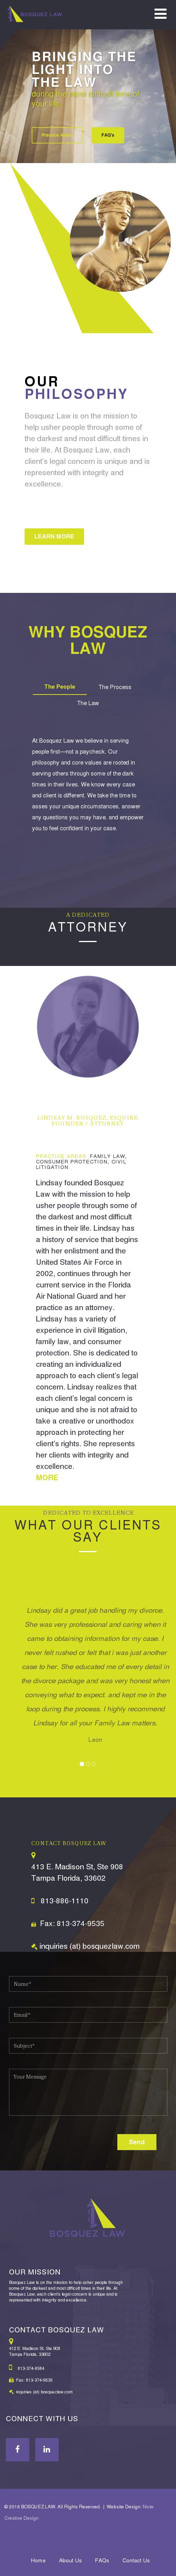 Bosquez Law - Tampa FL Lawyers